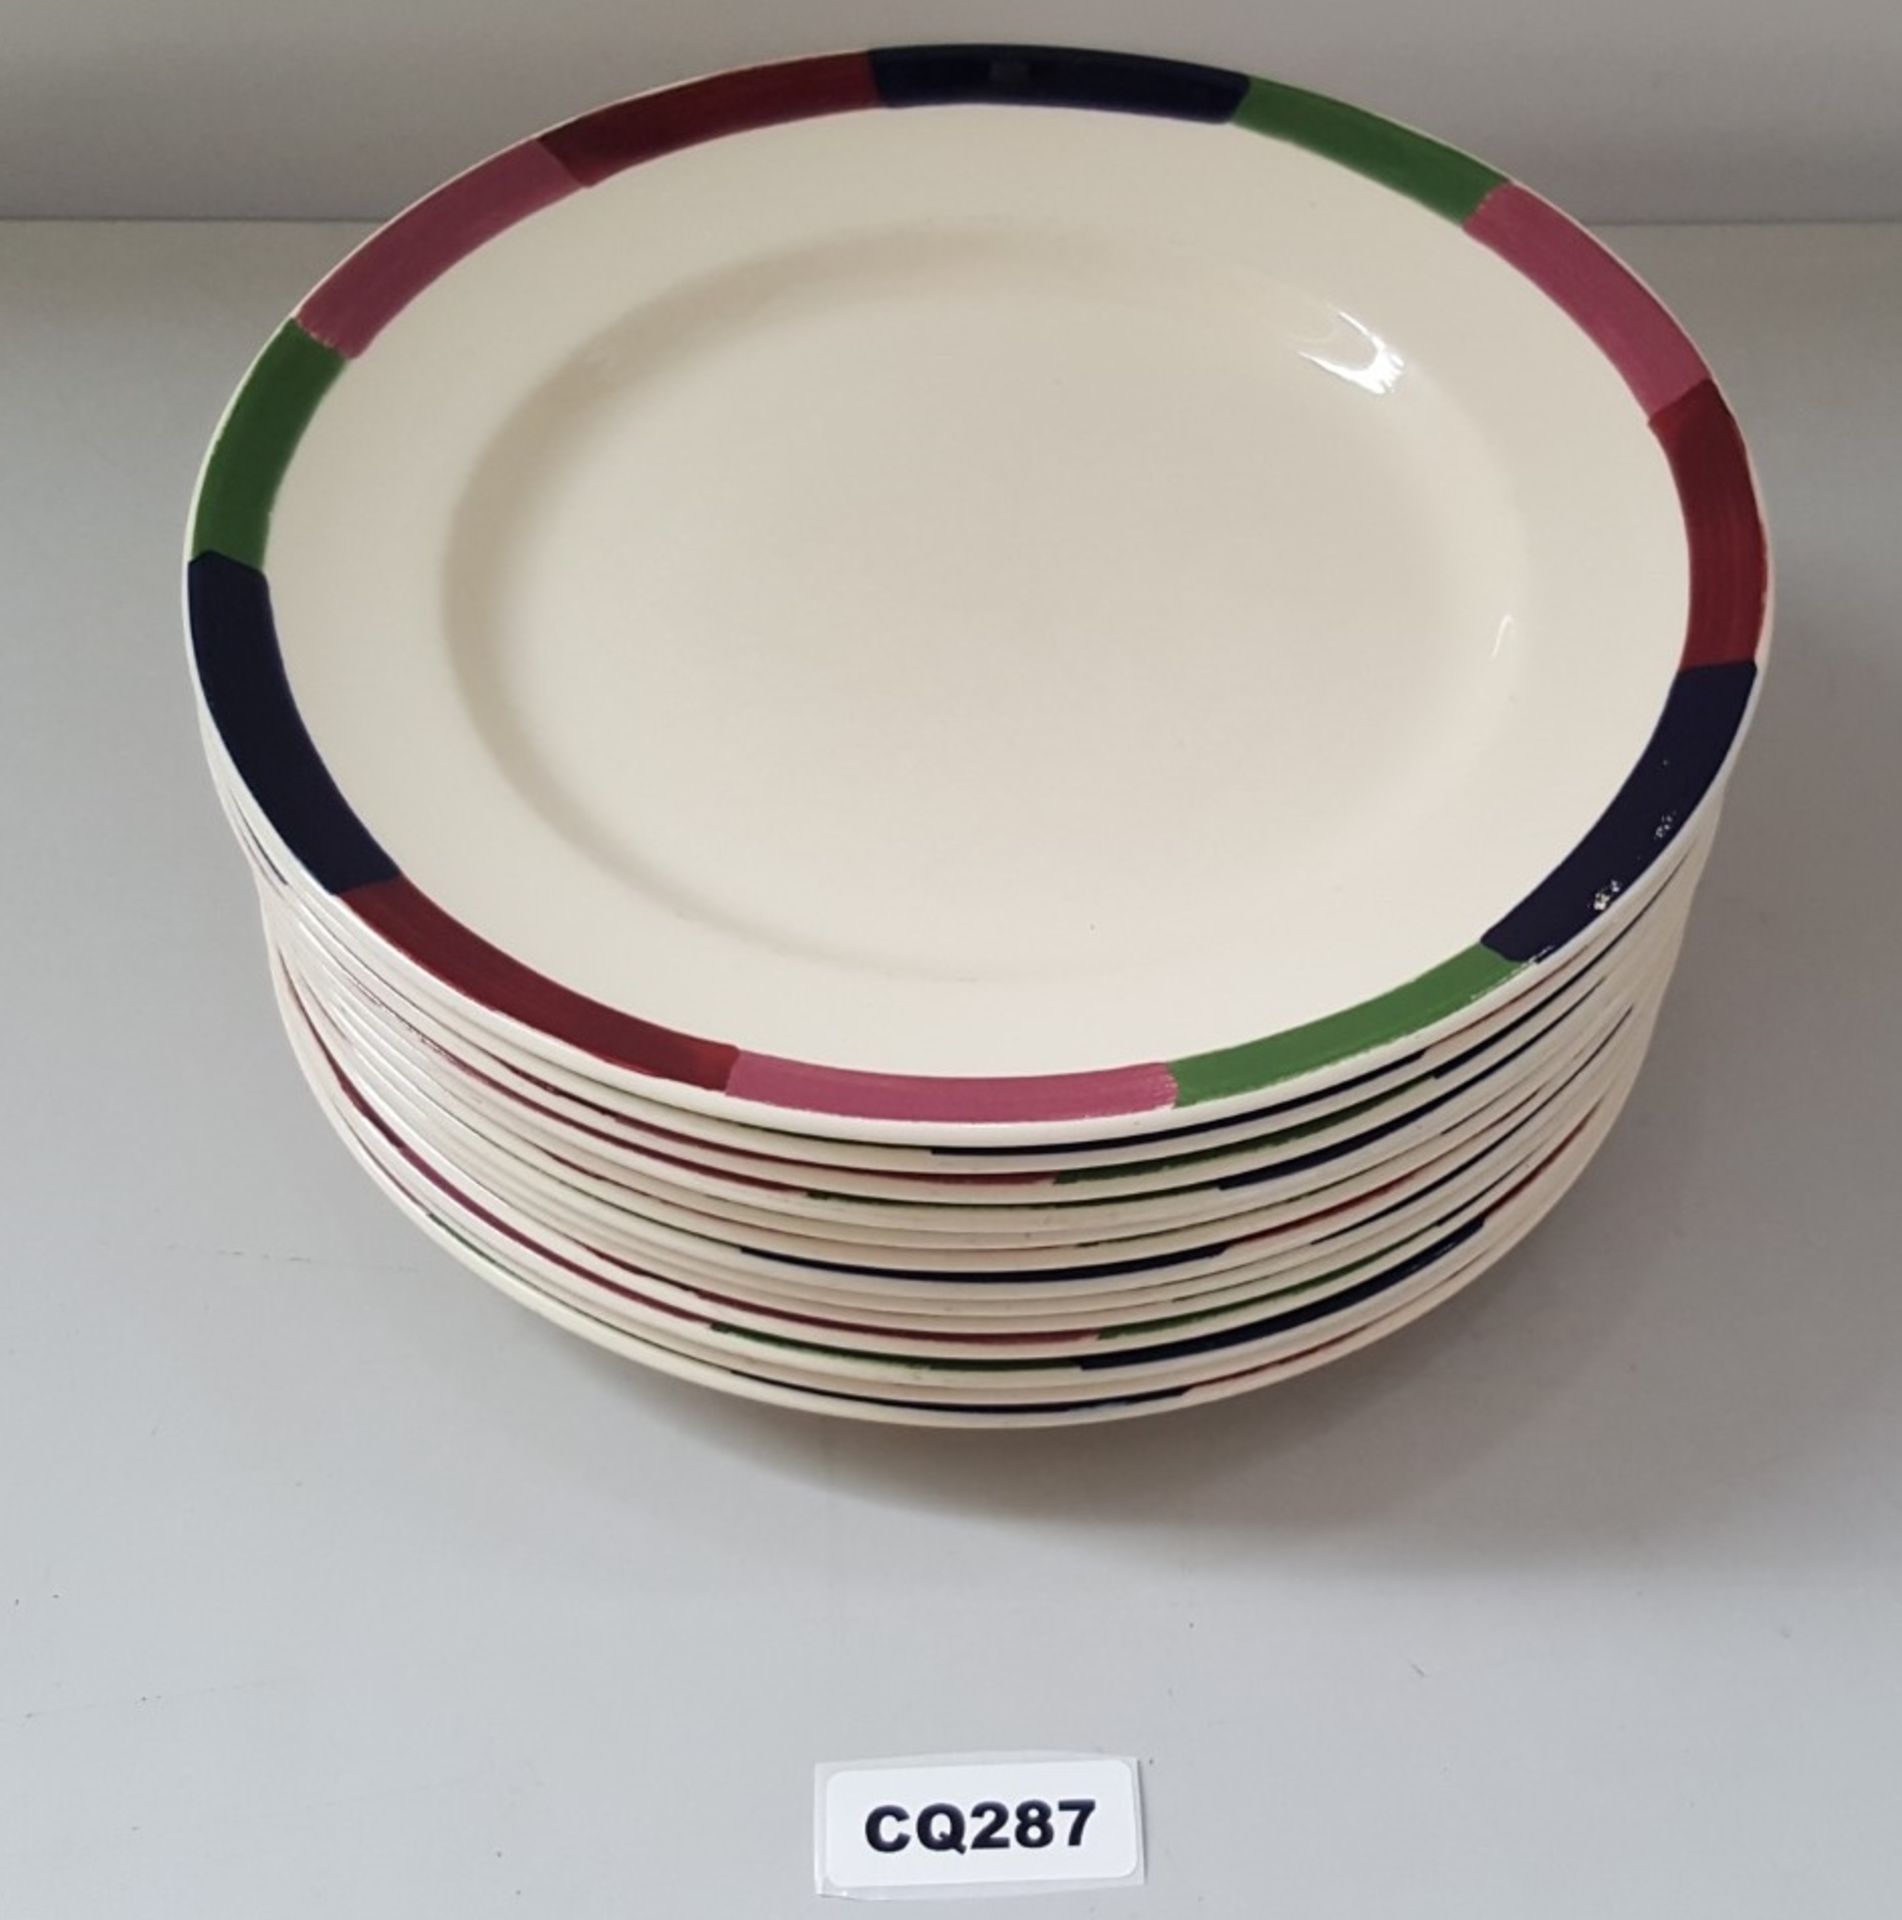 13 x Steelite Harmony Plates Cream With Pattered Egde 27CM - Ref CQ287 - Image 2 of 5